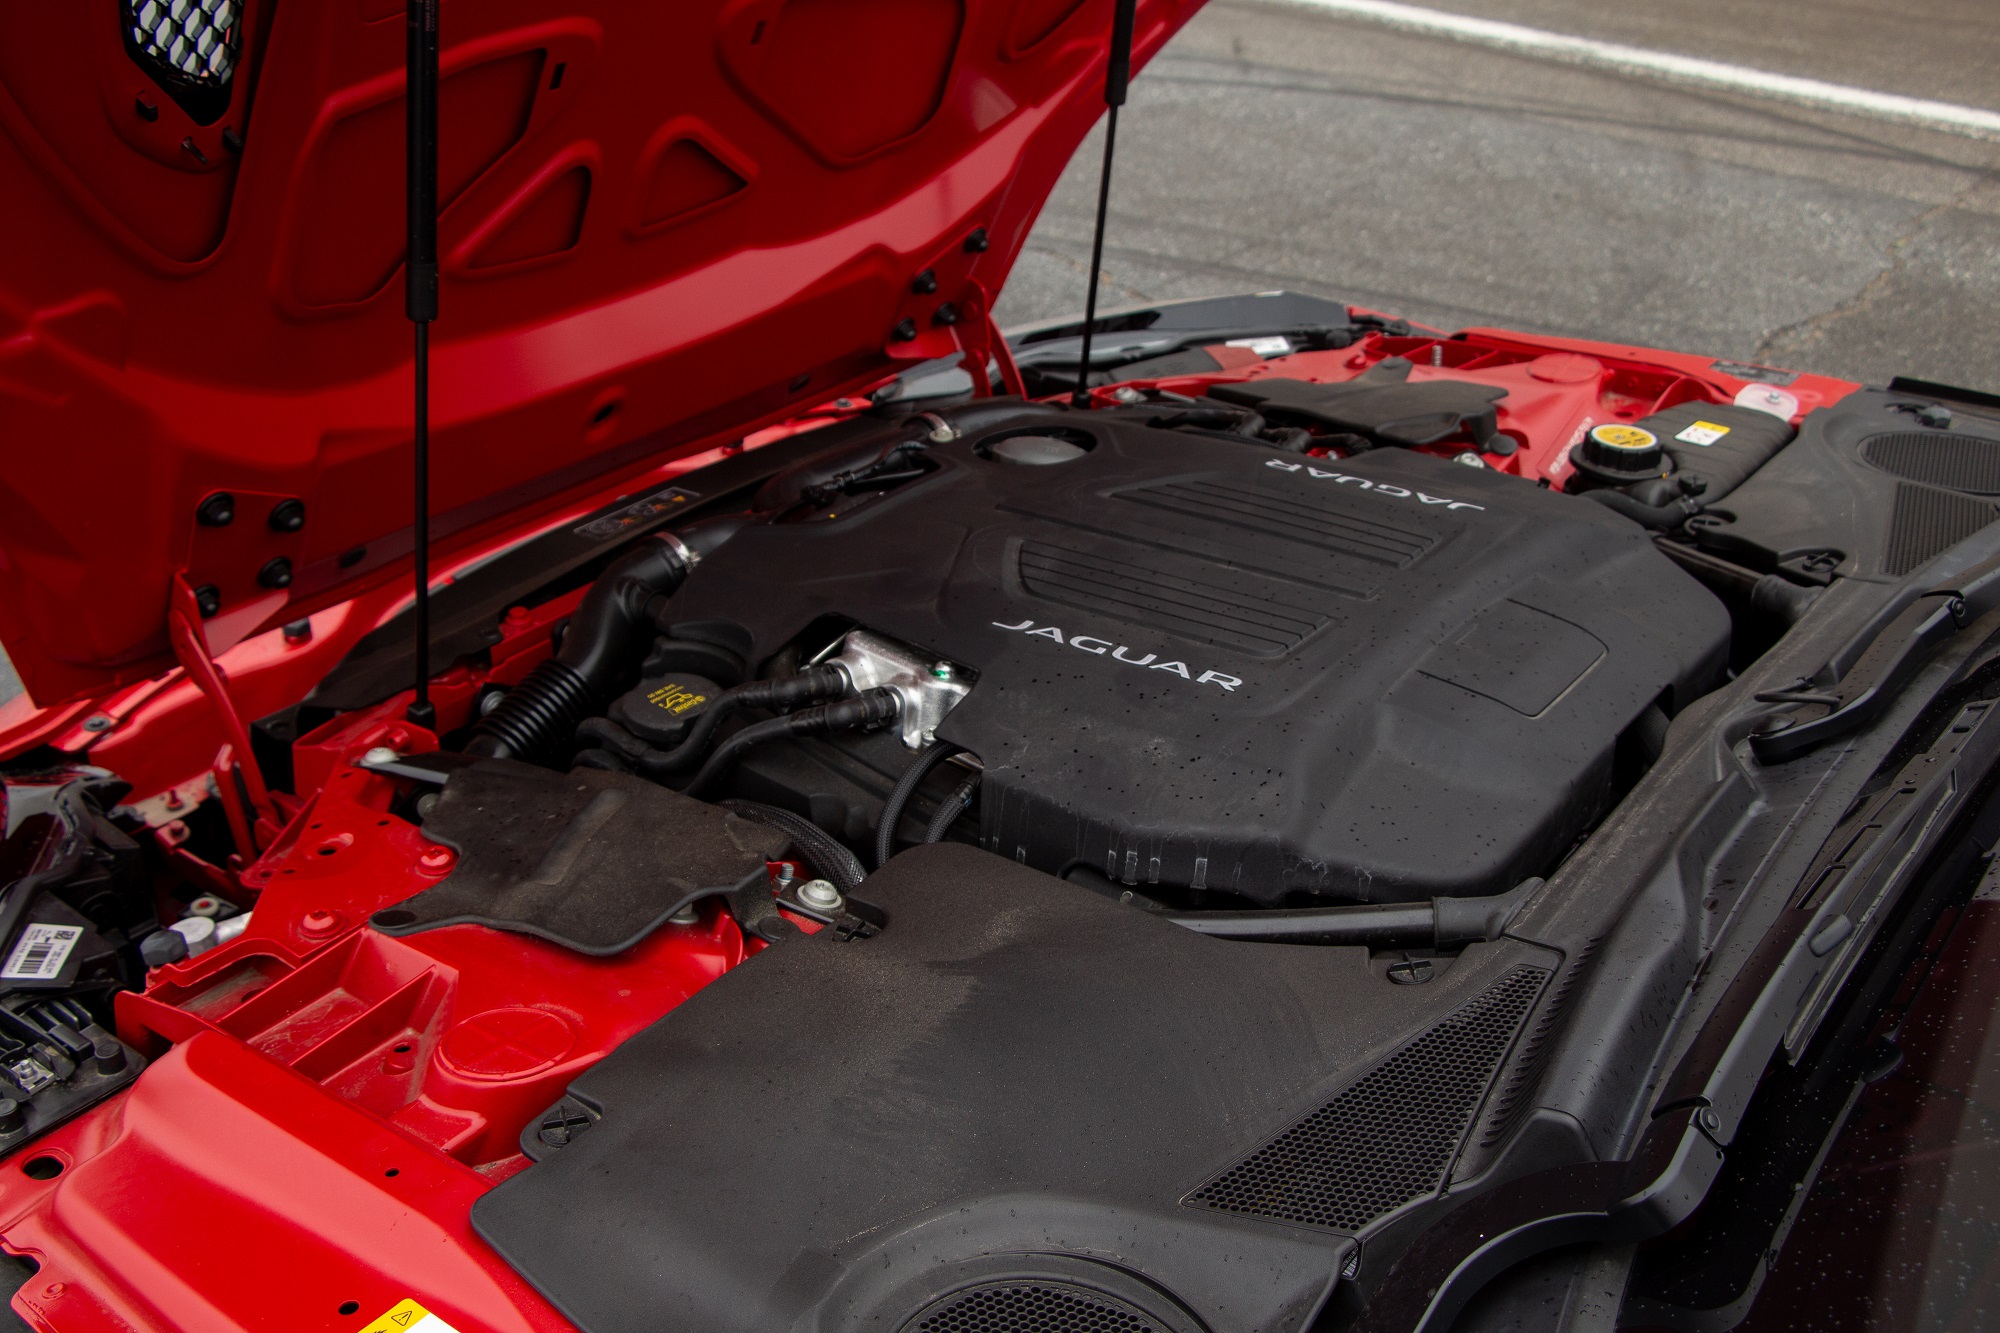 Jaguar F-TYPE Coupe P380 Supercharged V6 Engine Interior Exterior Colors Options Jake Stumph